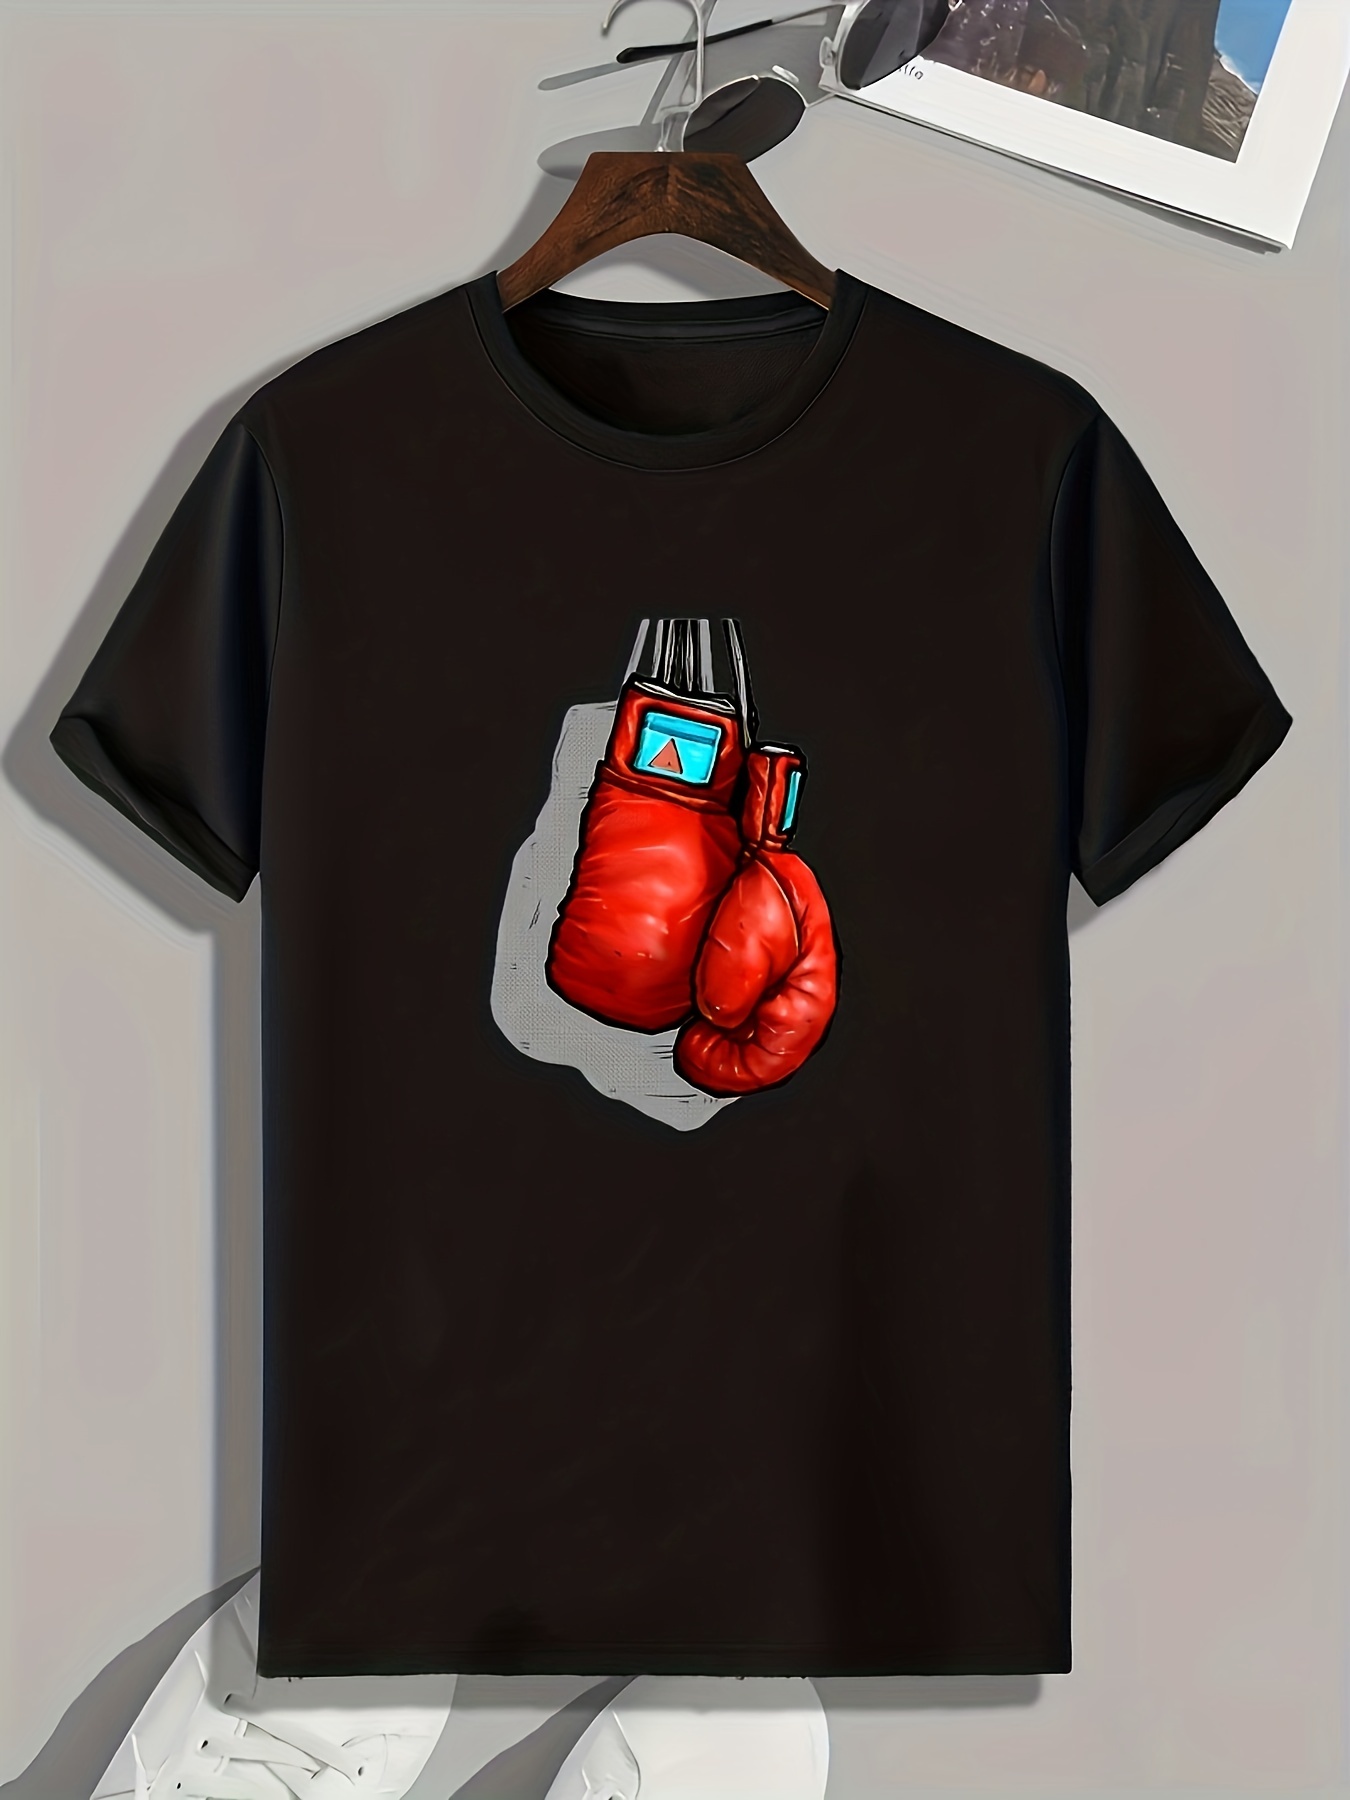 Playera camiseta boxeo/kickboxing. hombre